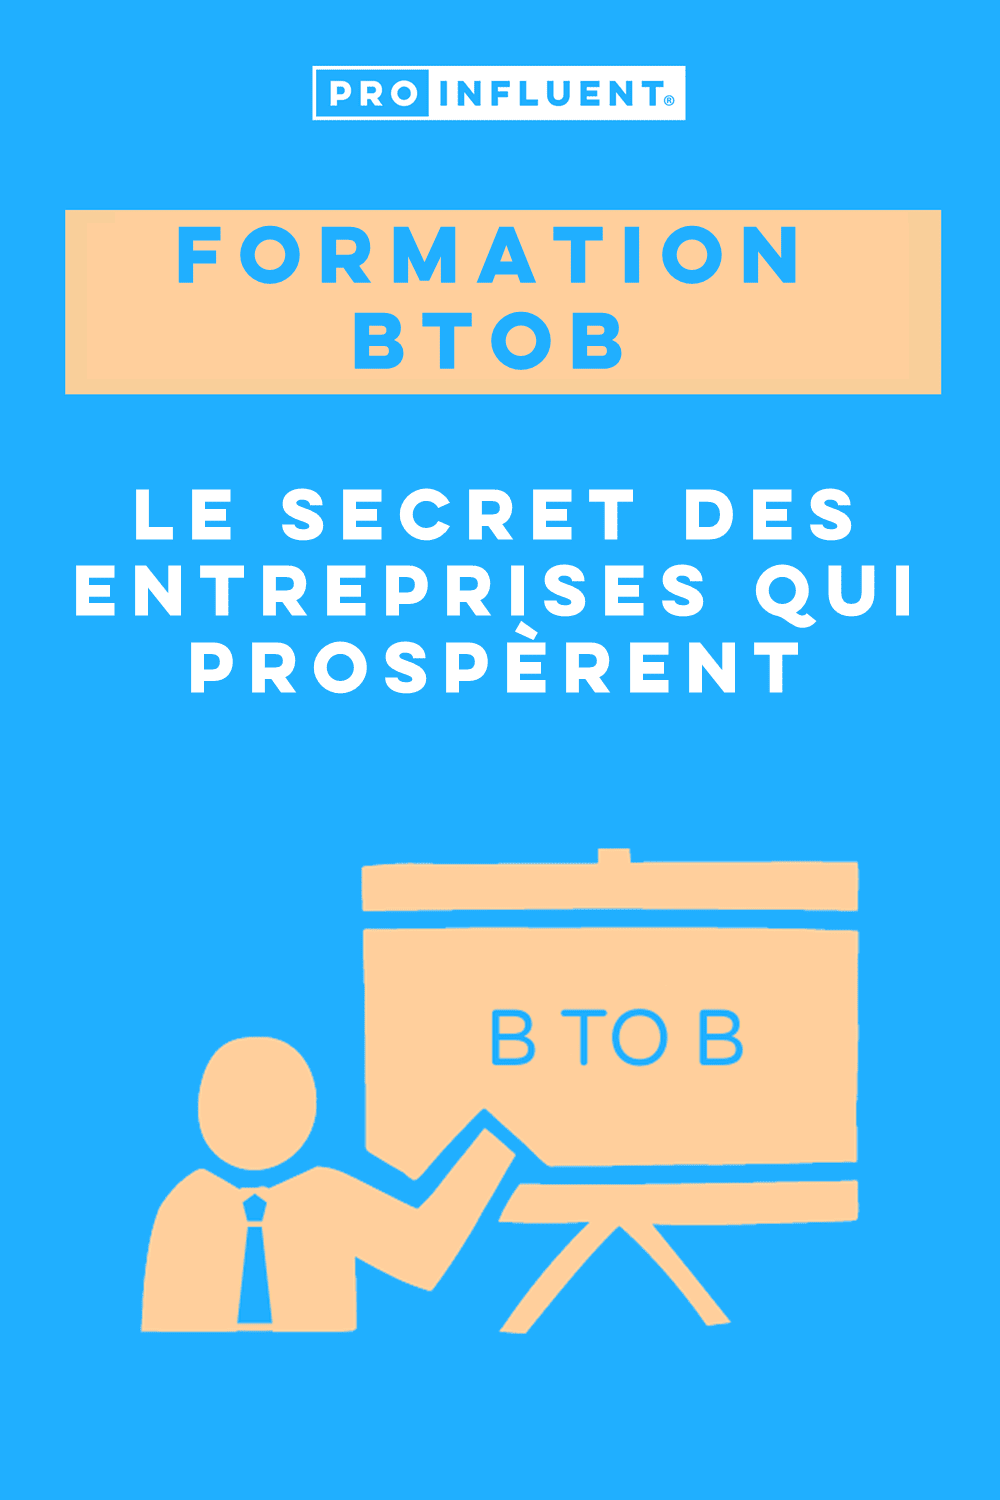 B2B training: the secret of successful businesses